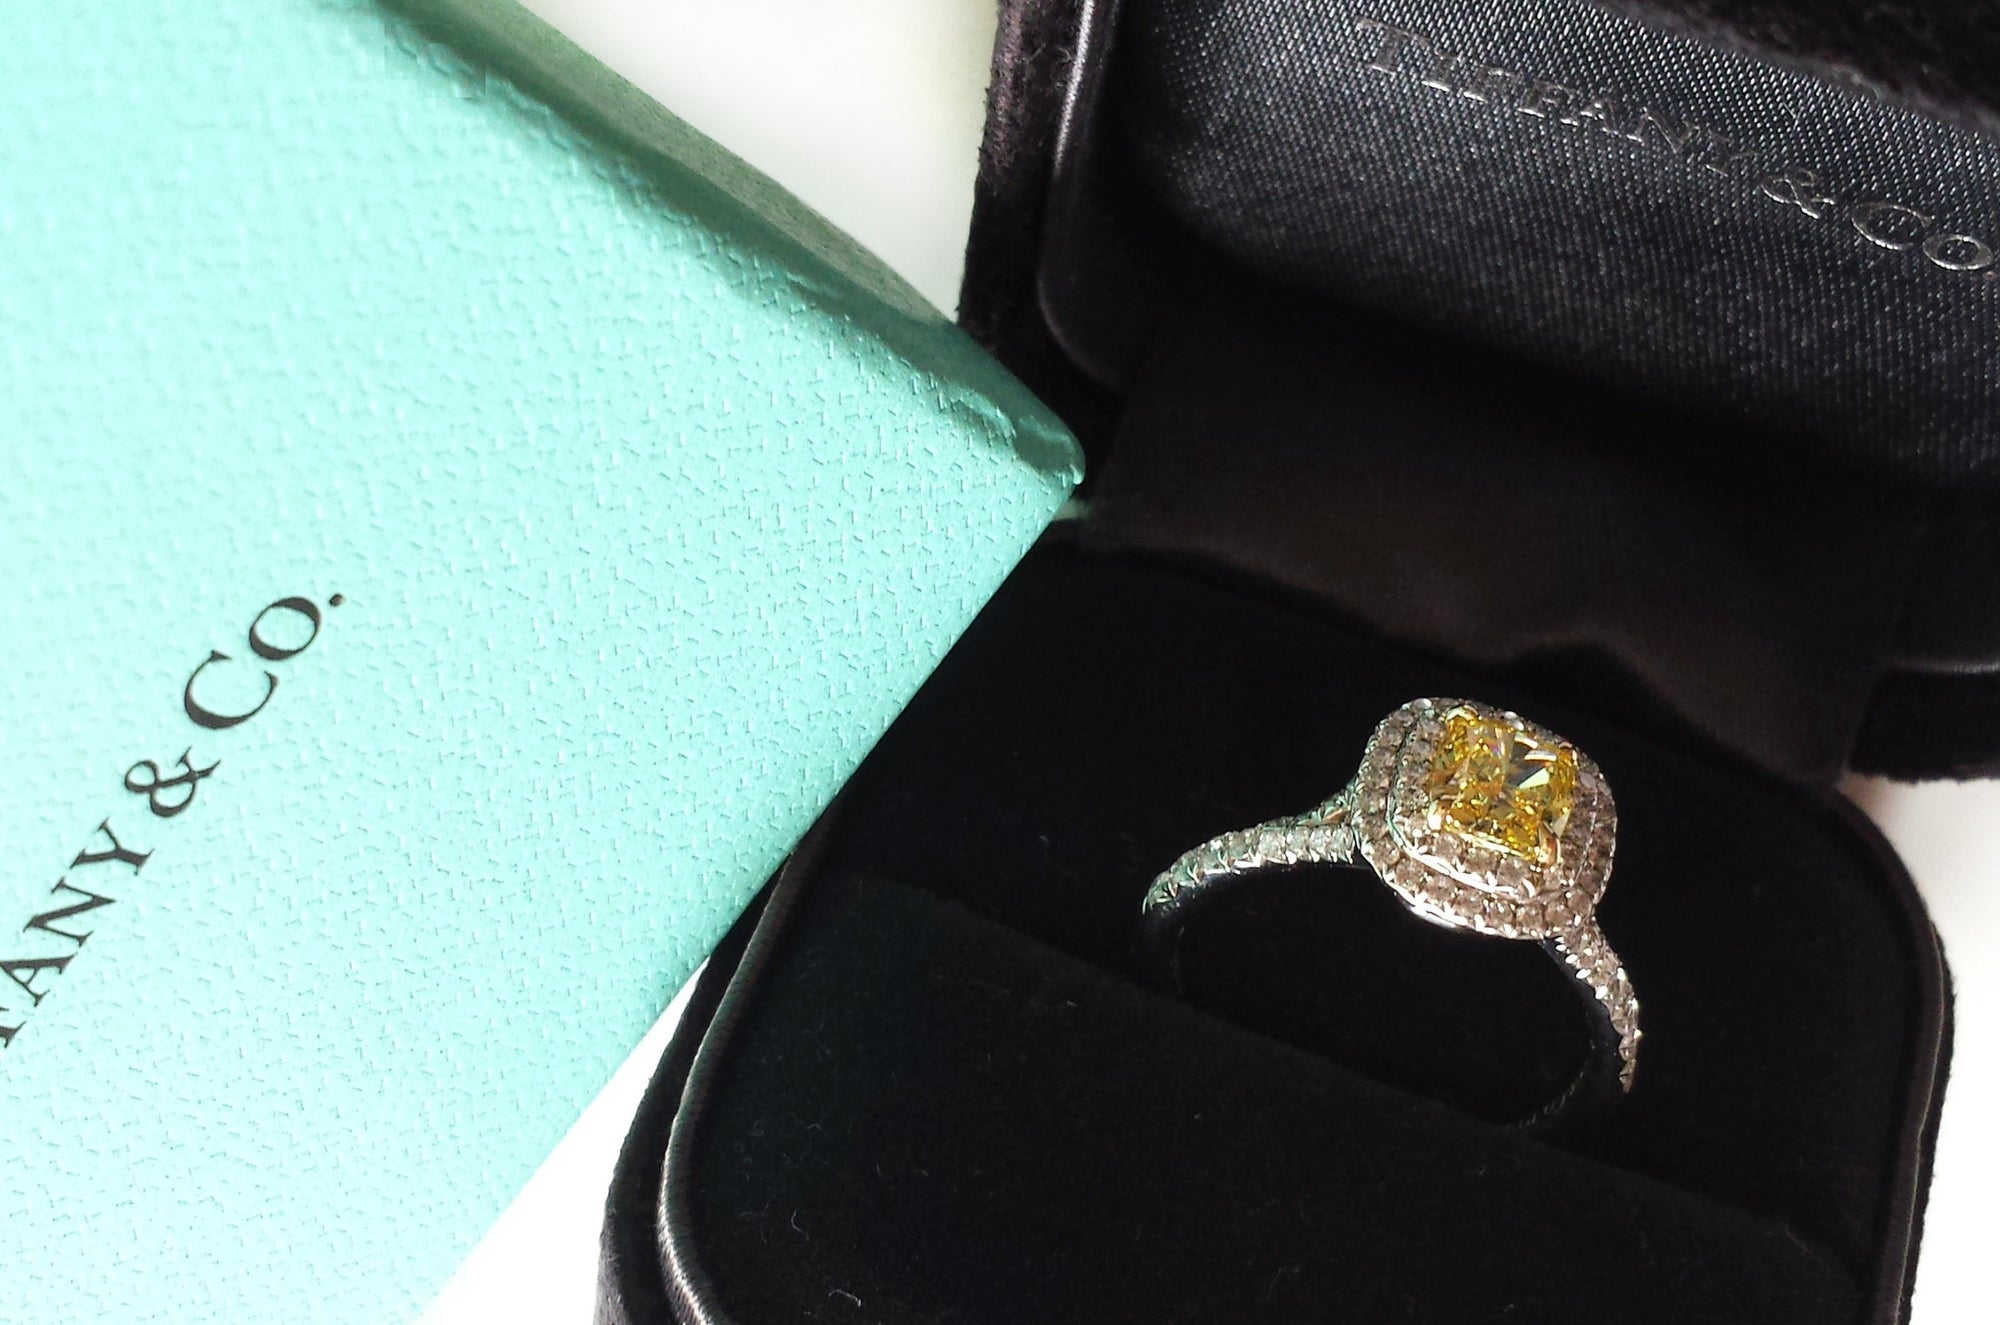 Tiffany & Co. double Halo blue diamond engagement ring